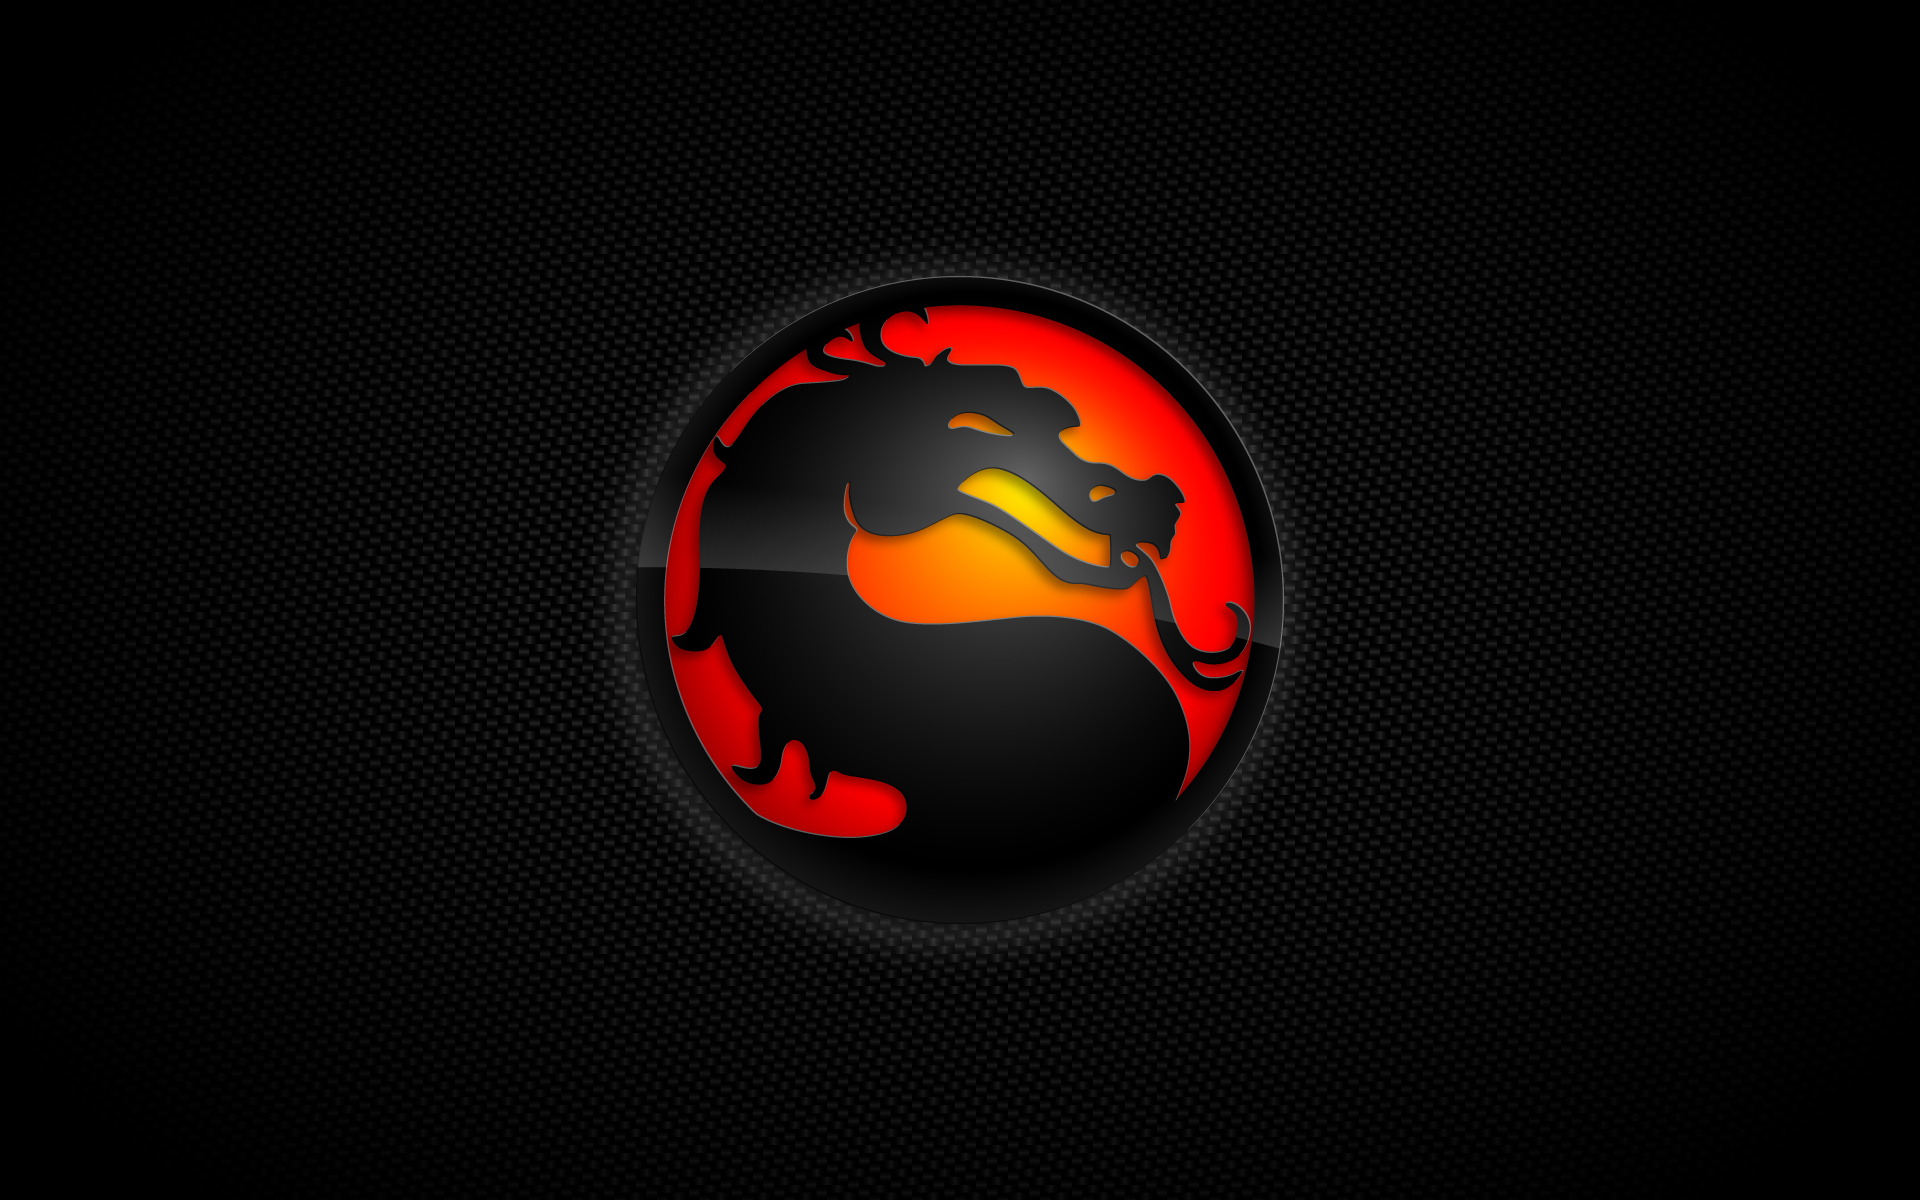 Mortal Kombat - GameSpot